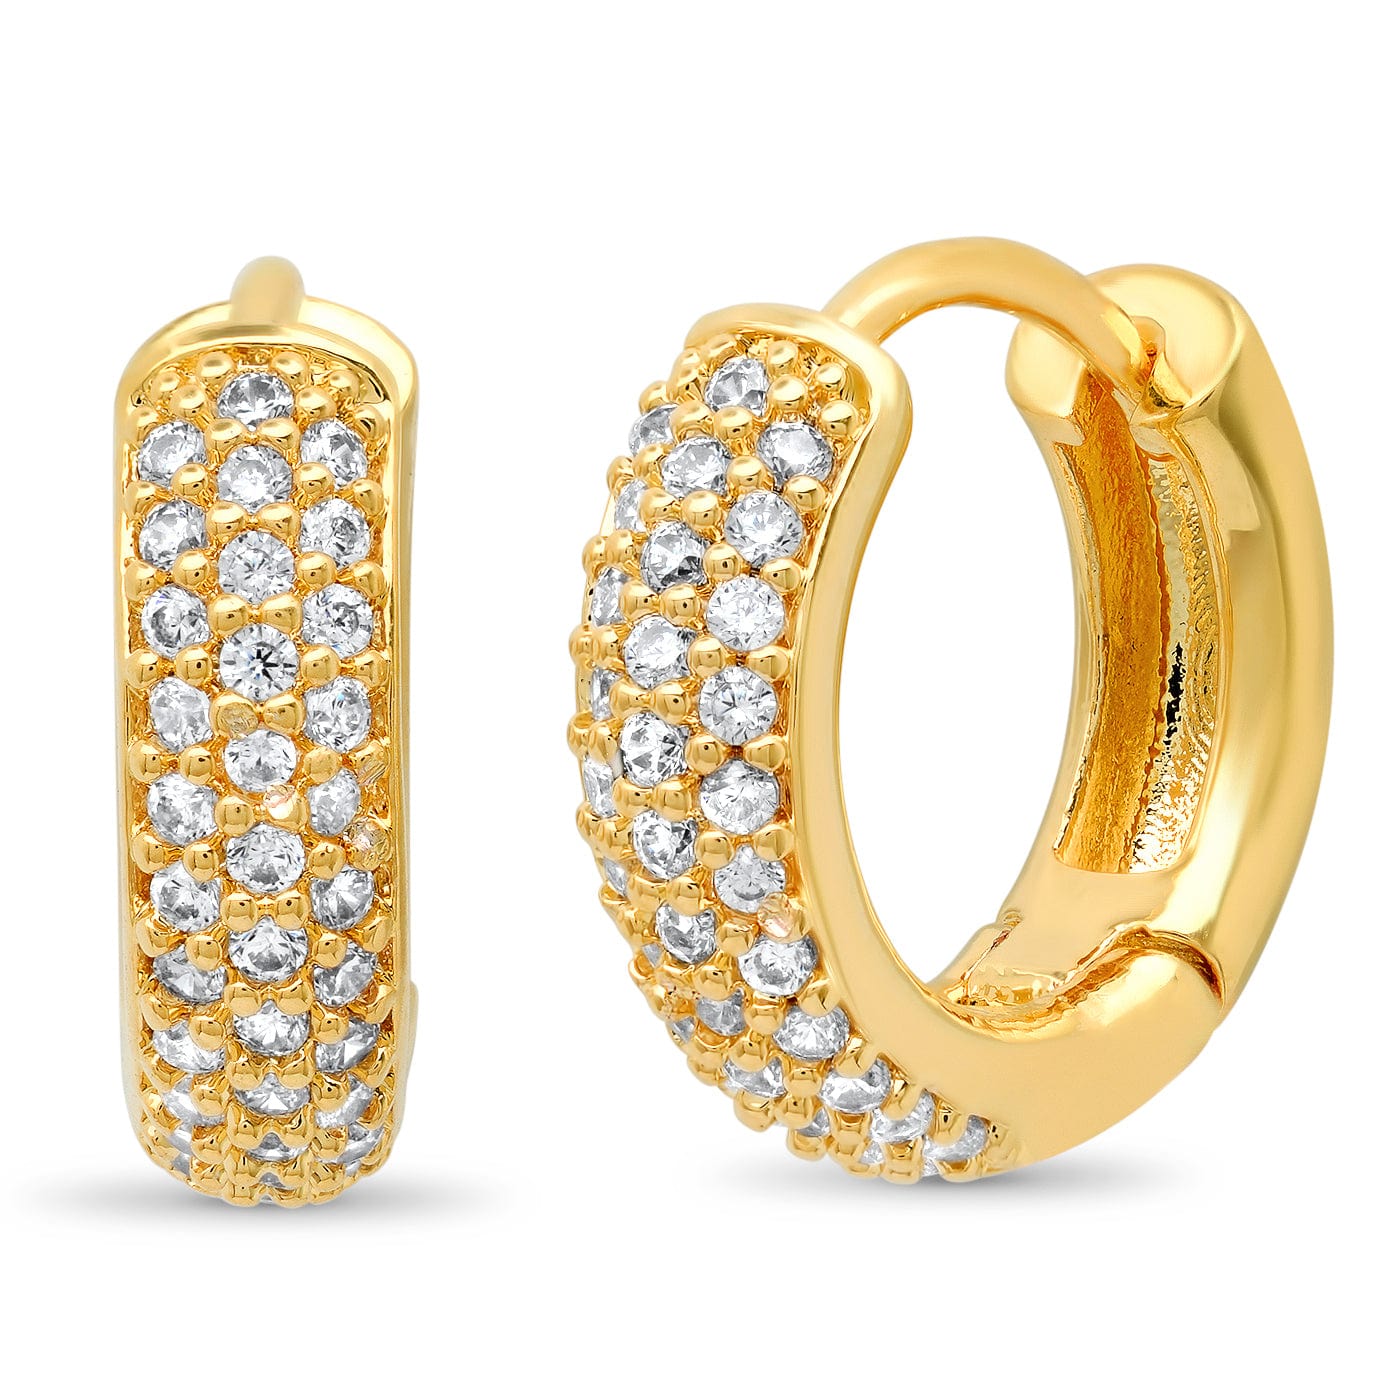 TAI JEWELRY Earrings Gold Pave Huggies